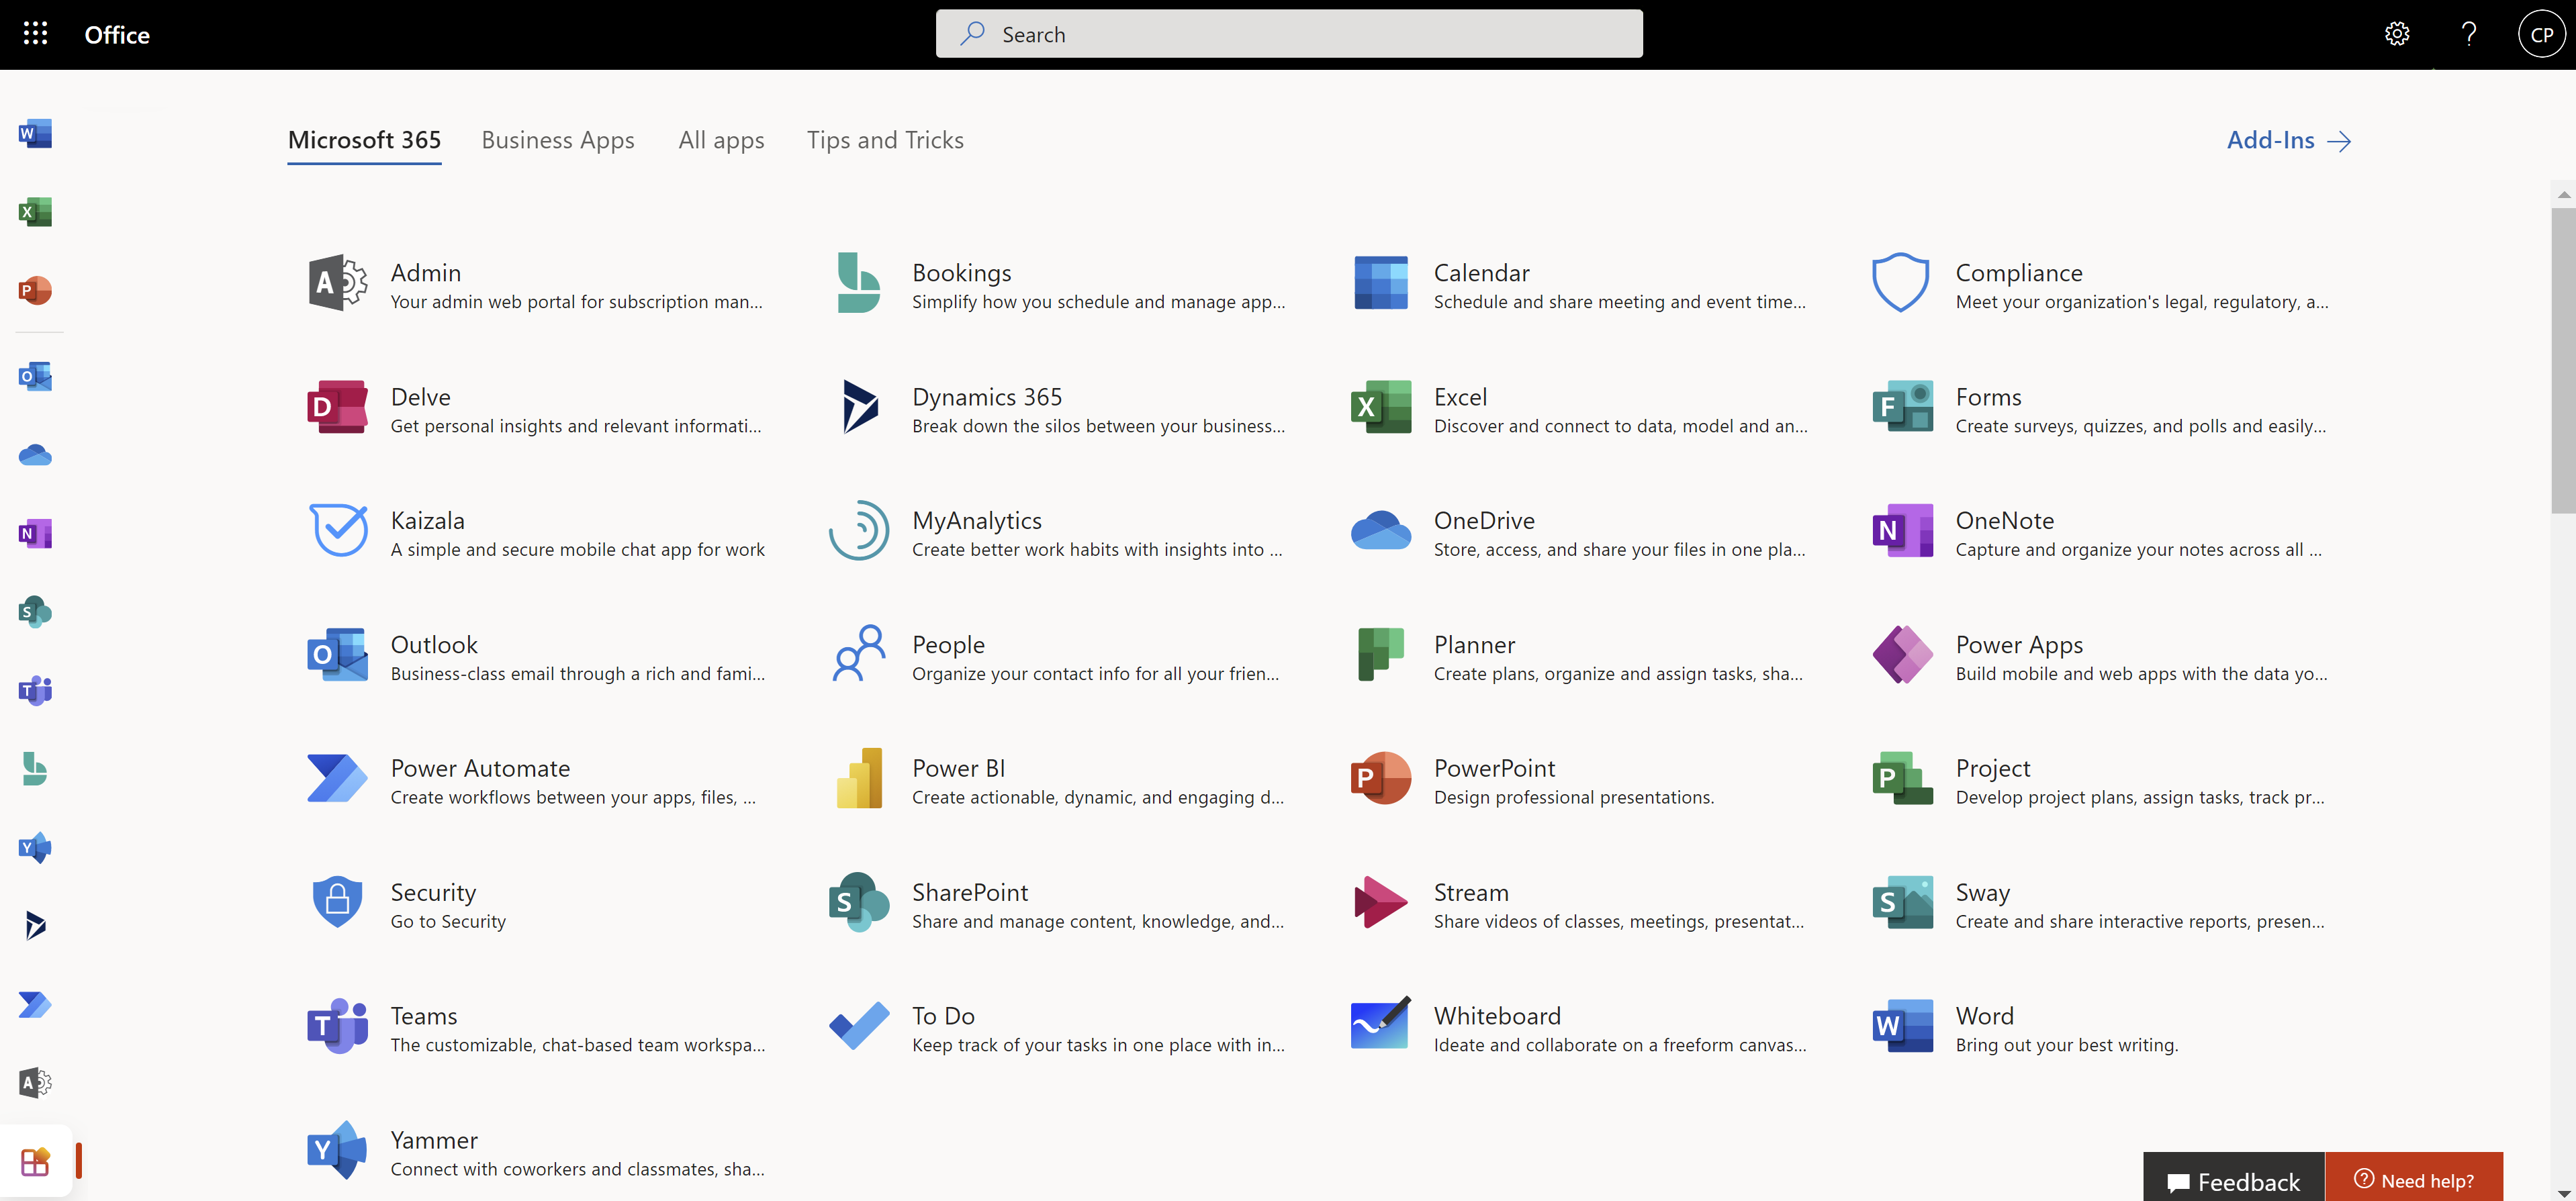 Schema van Microsoft Products.